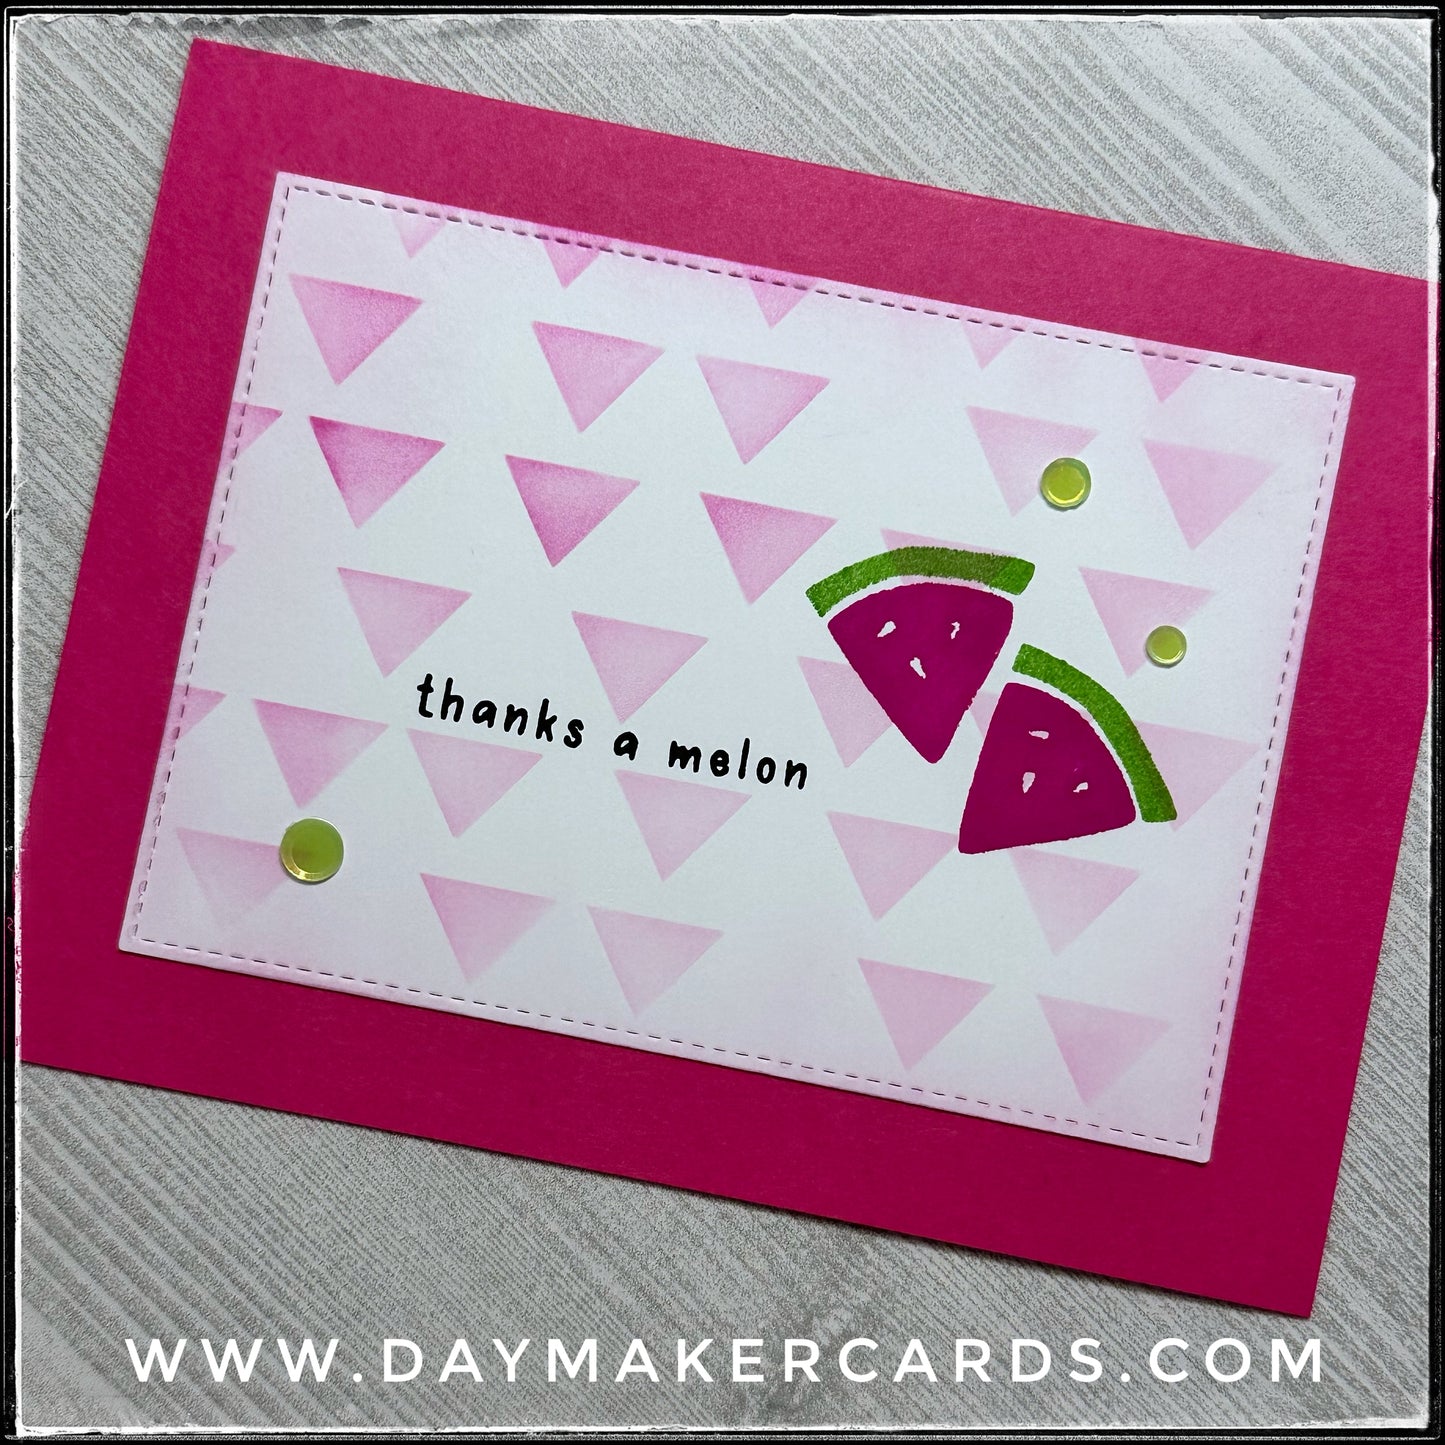 Thanks A Melon Handmade Card